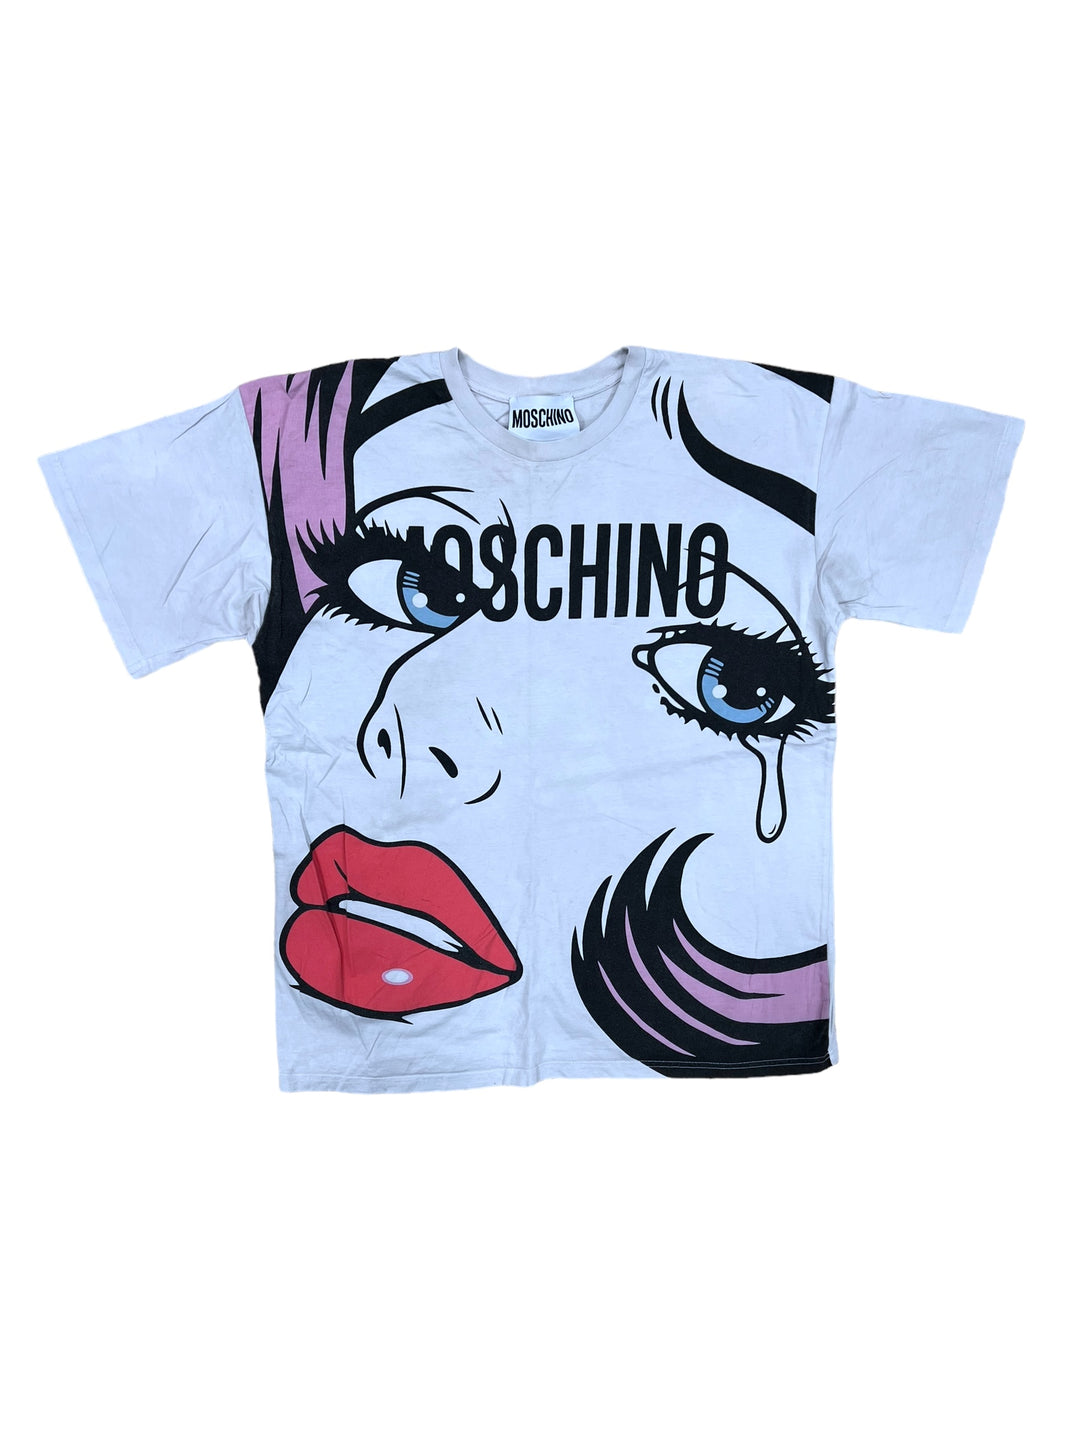 Moschino vintage printed Tshirt Women's large